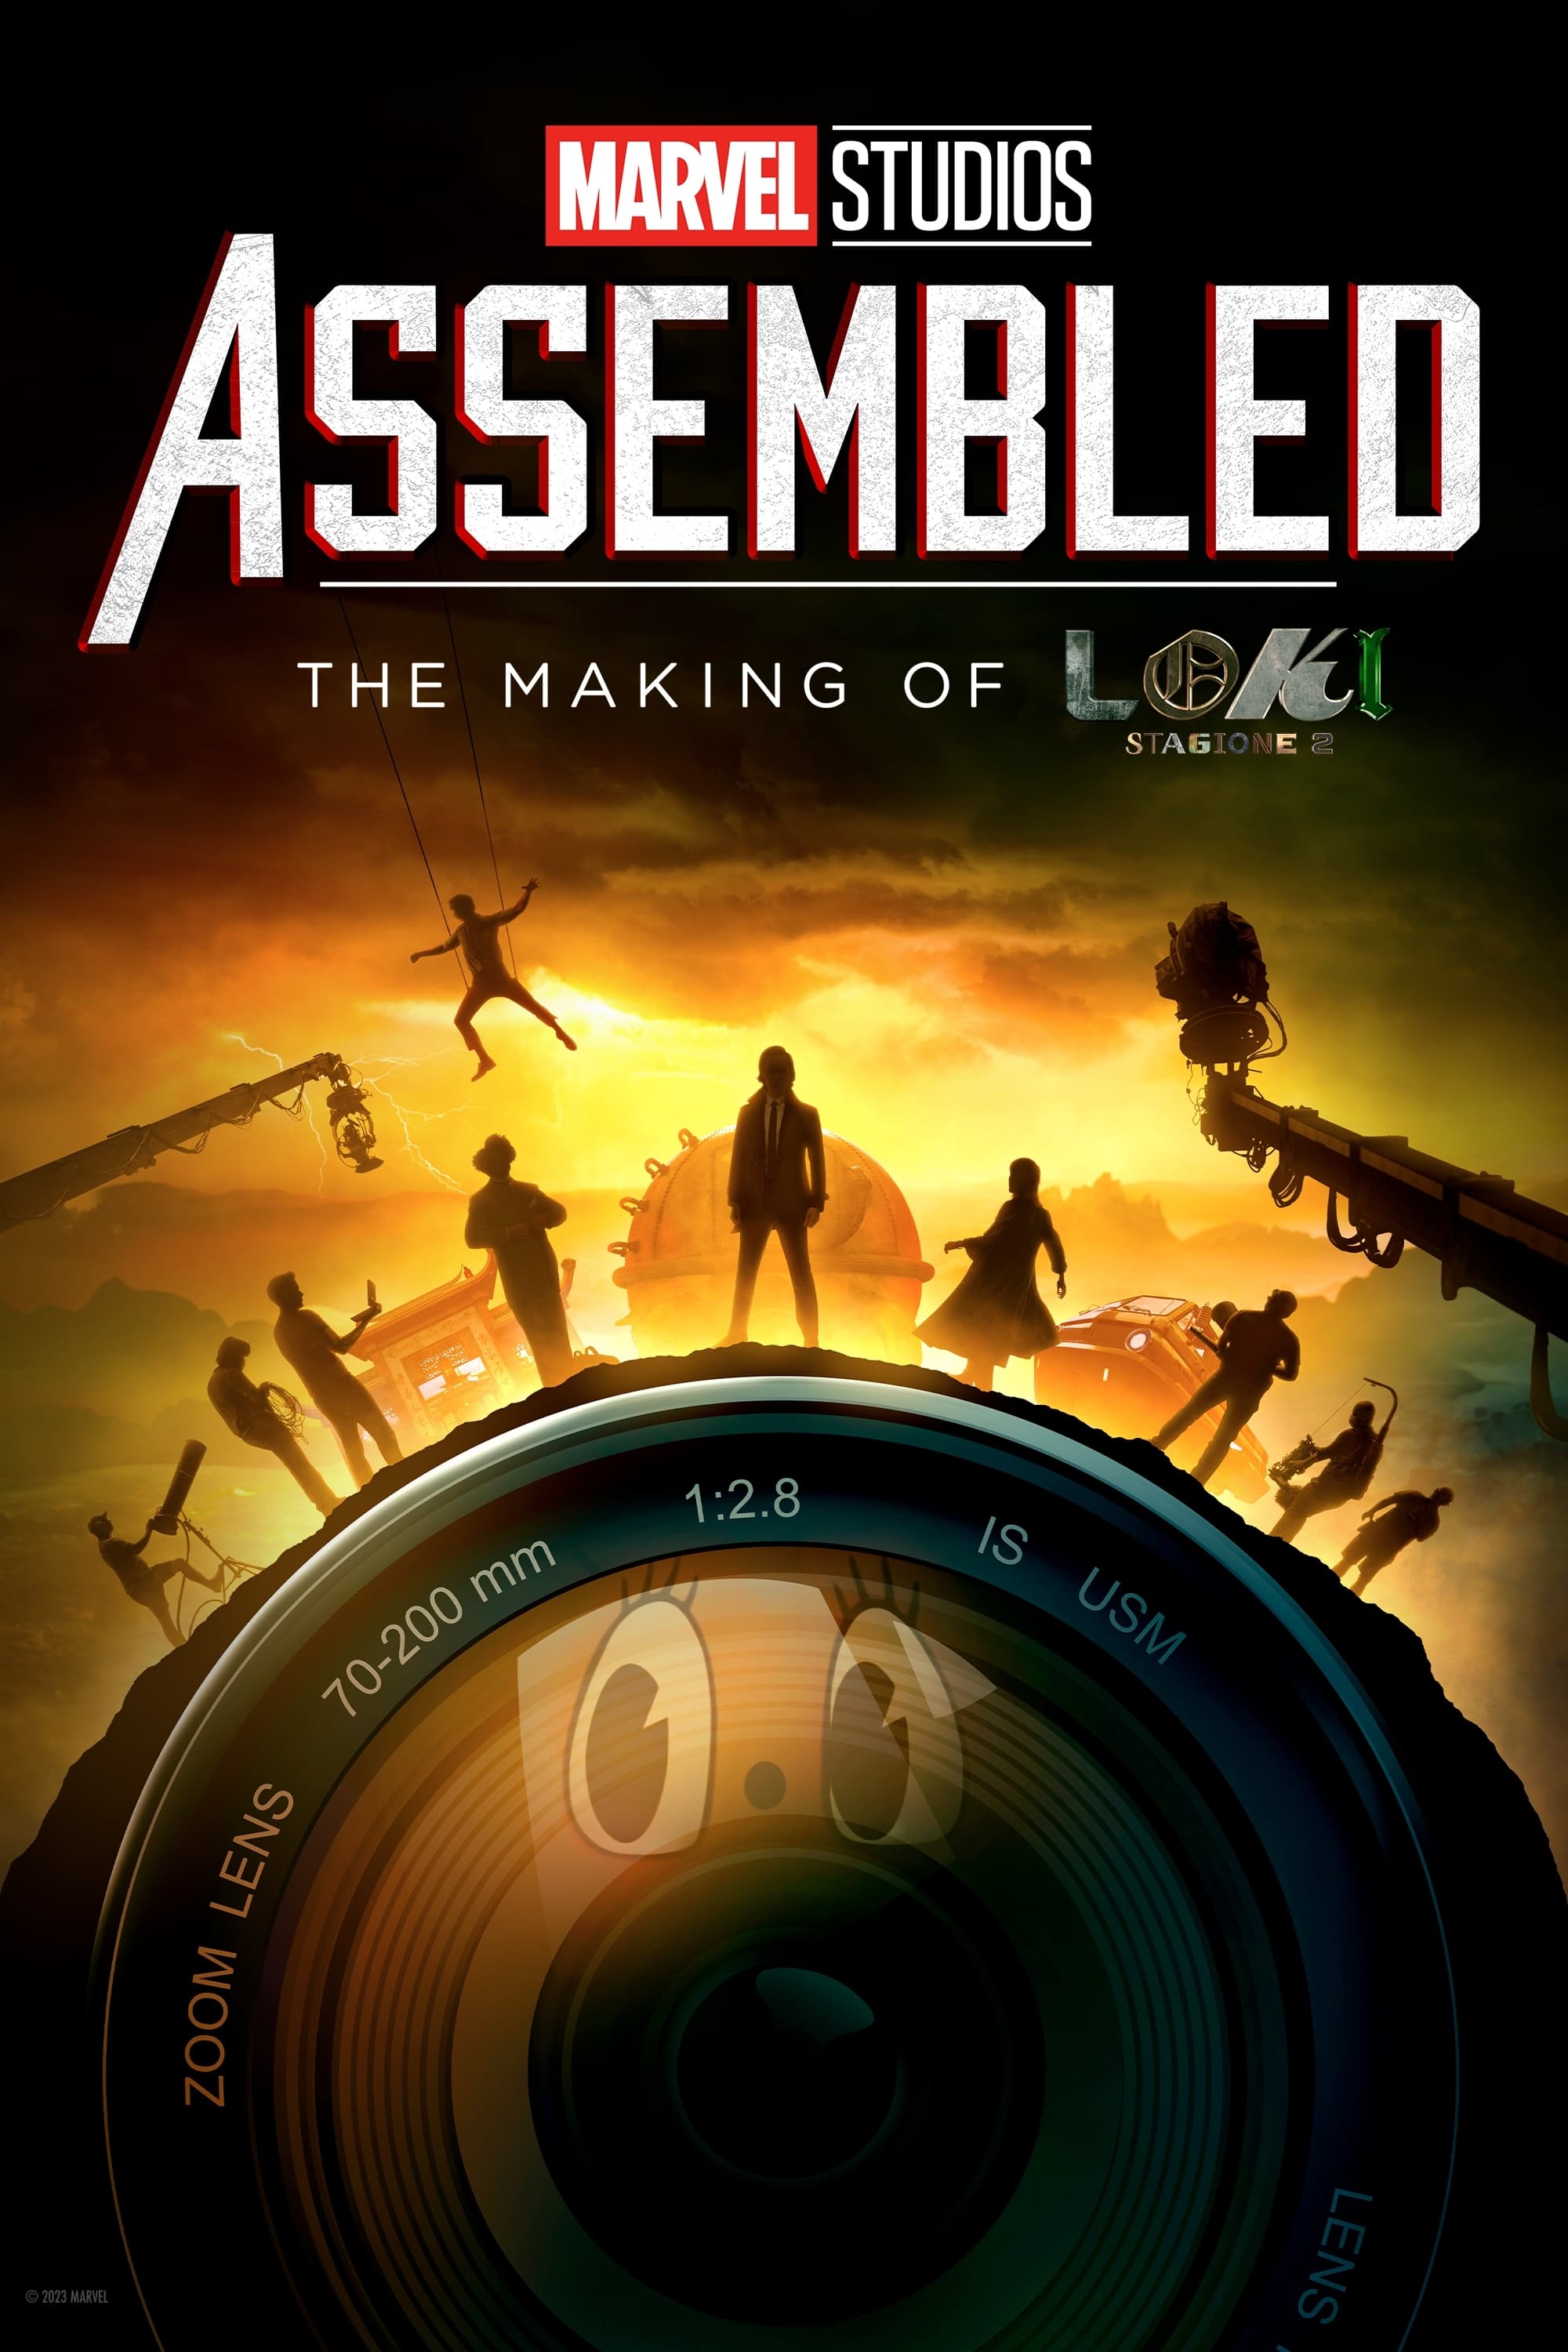 Marvel Studios Assembled: The Making of Loki Season 2 film